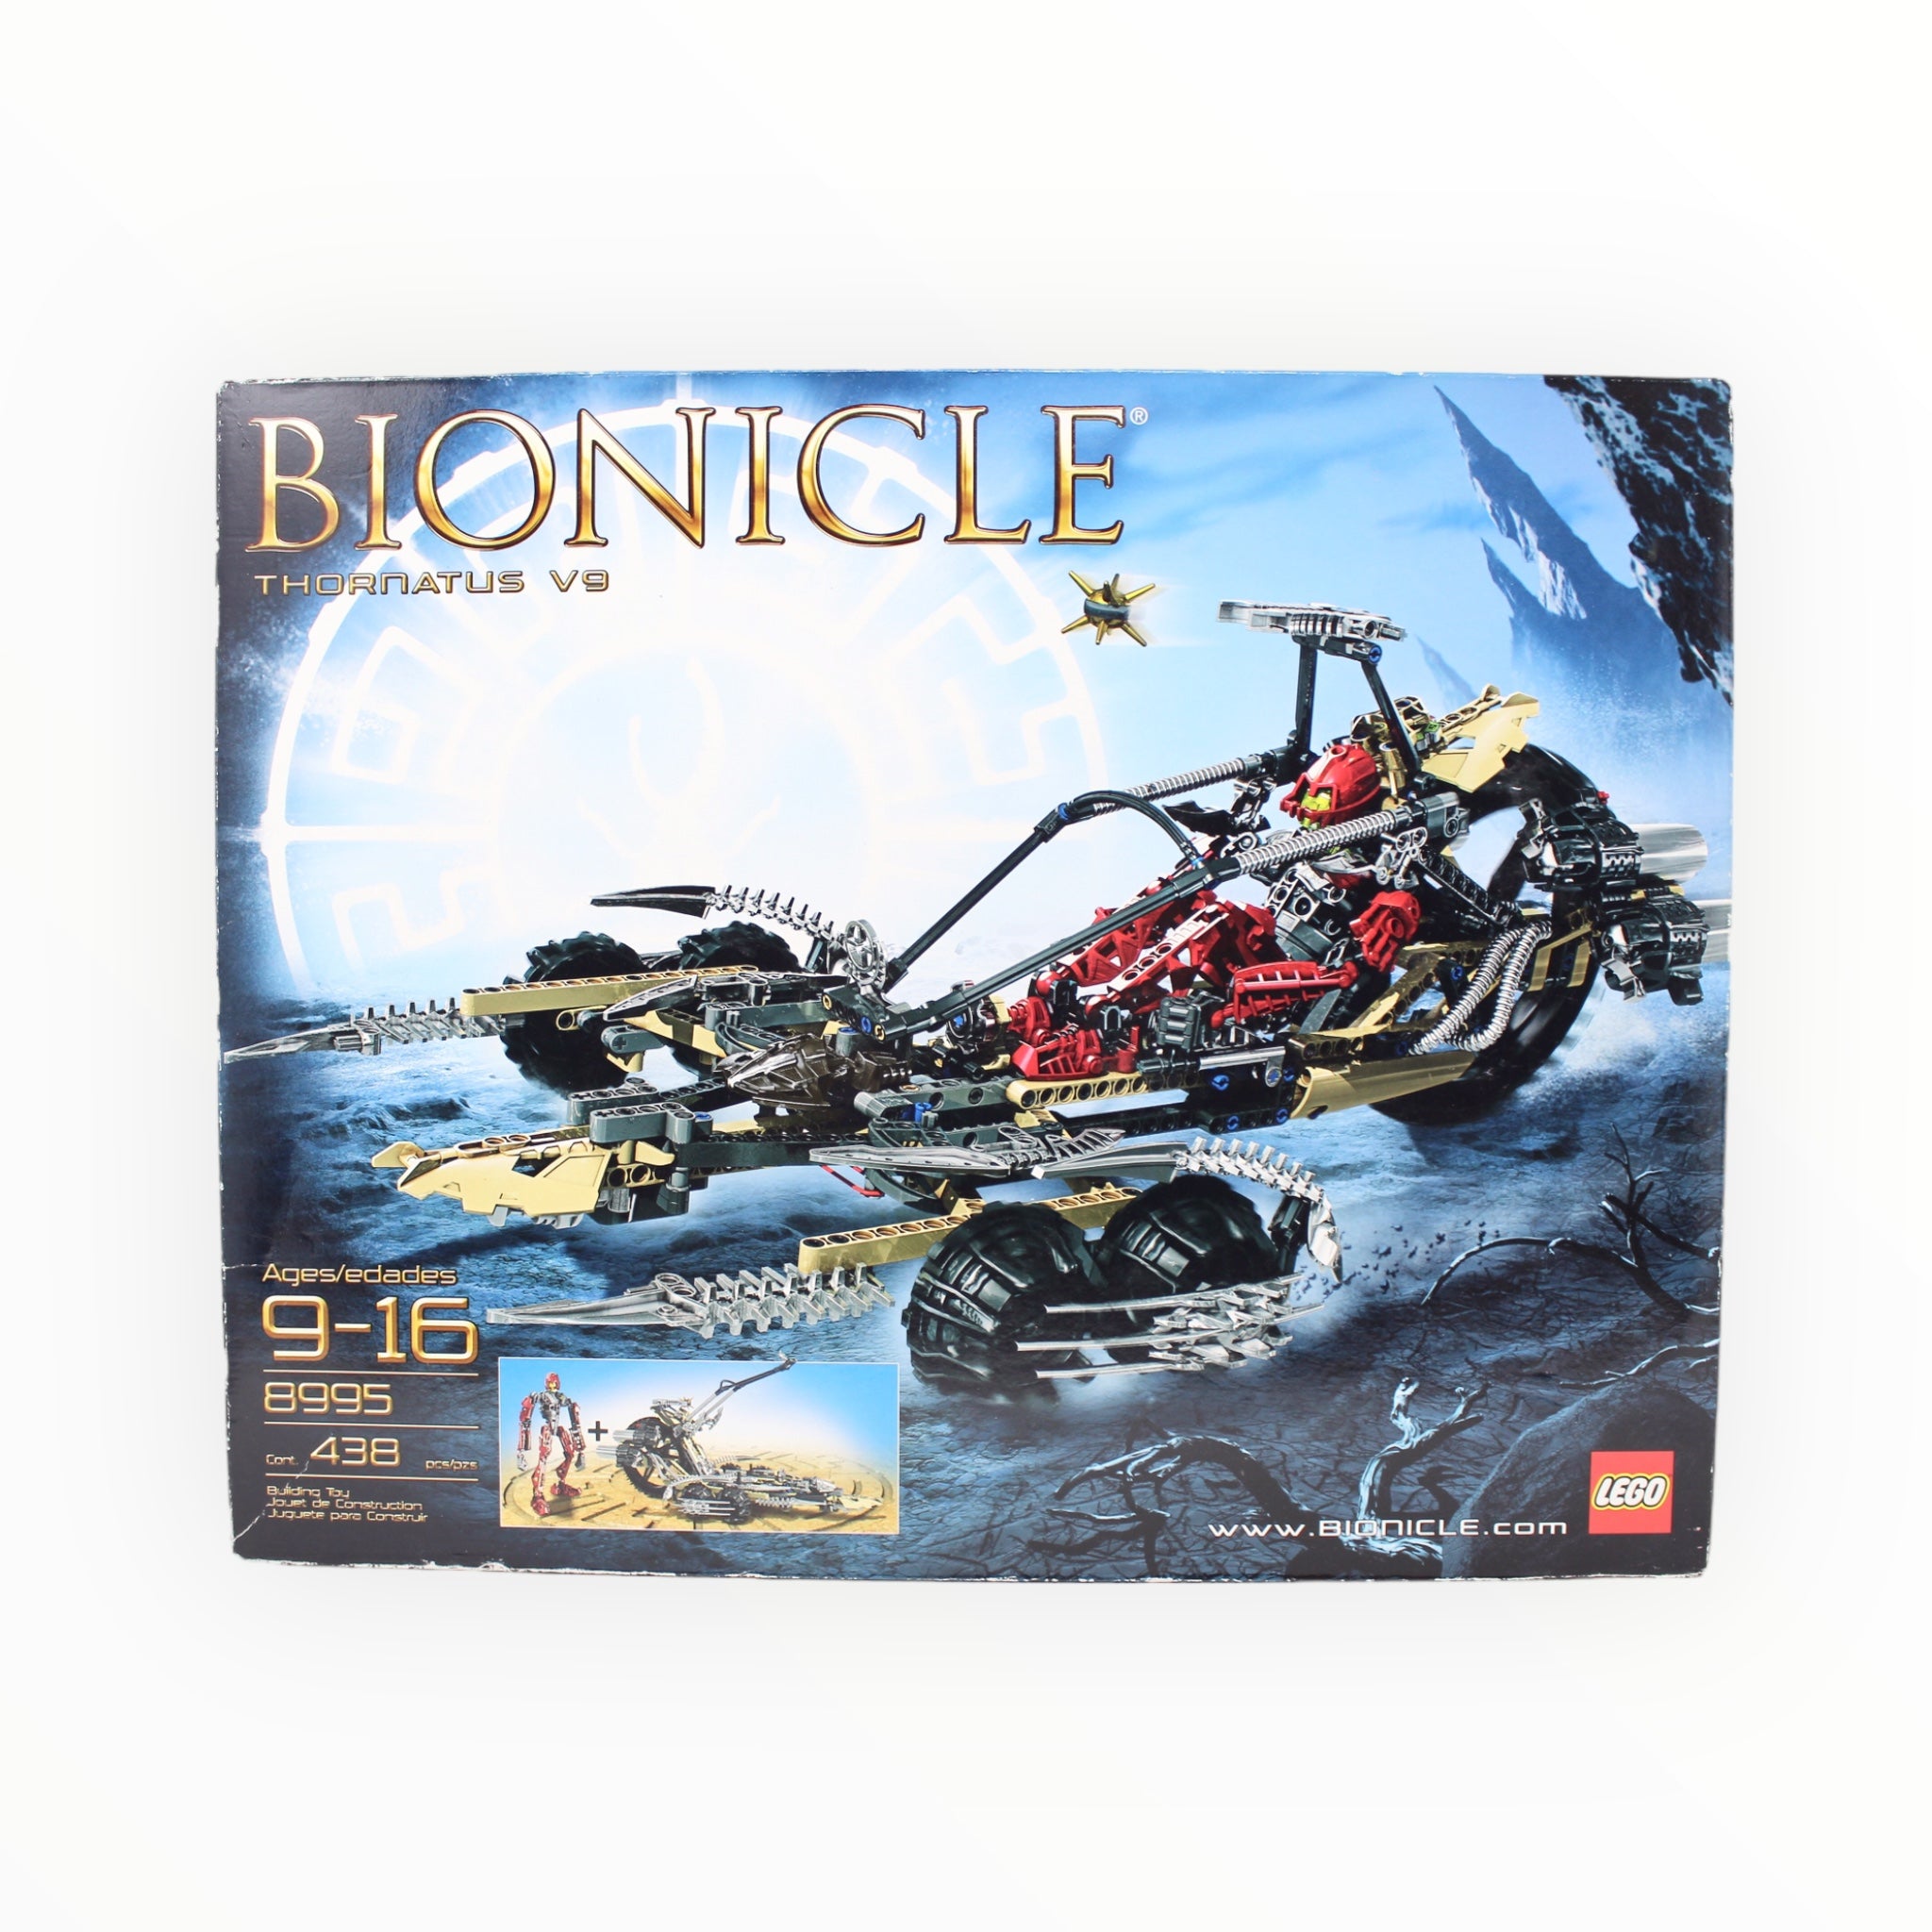 Certified Used Set 8995 Bionicle Thornatus V9